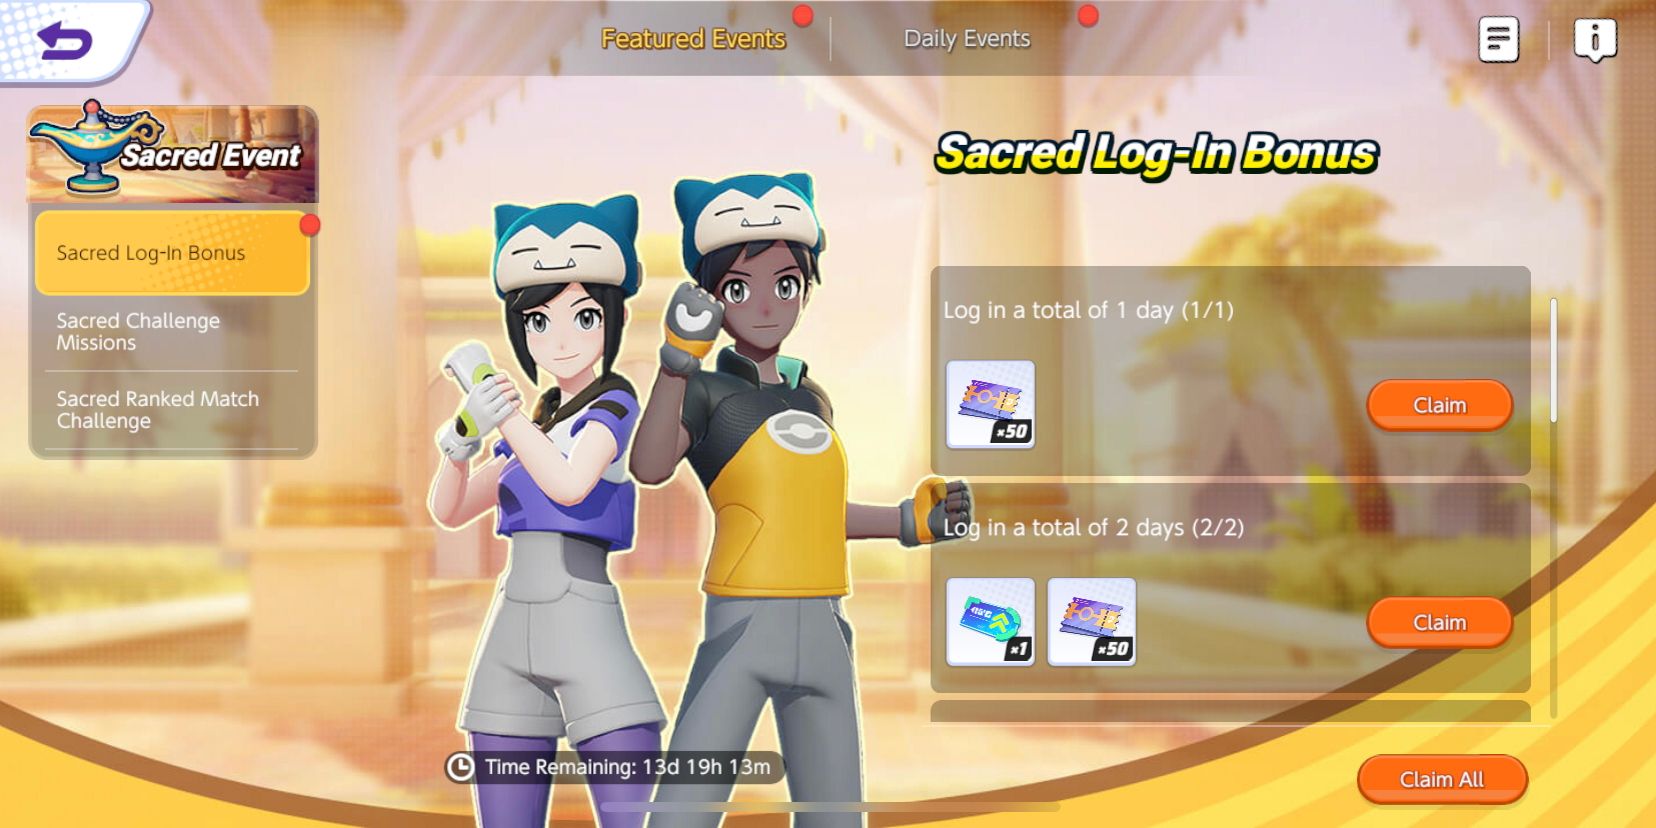 Pokemon Unite Sacred Event Log-In Bonus screen showing the different rewards